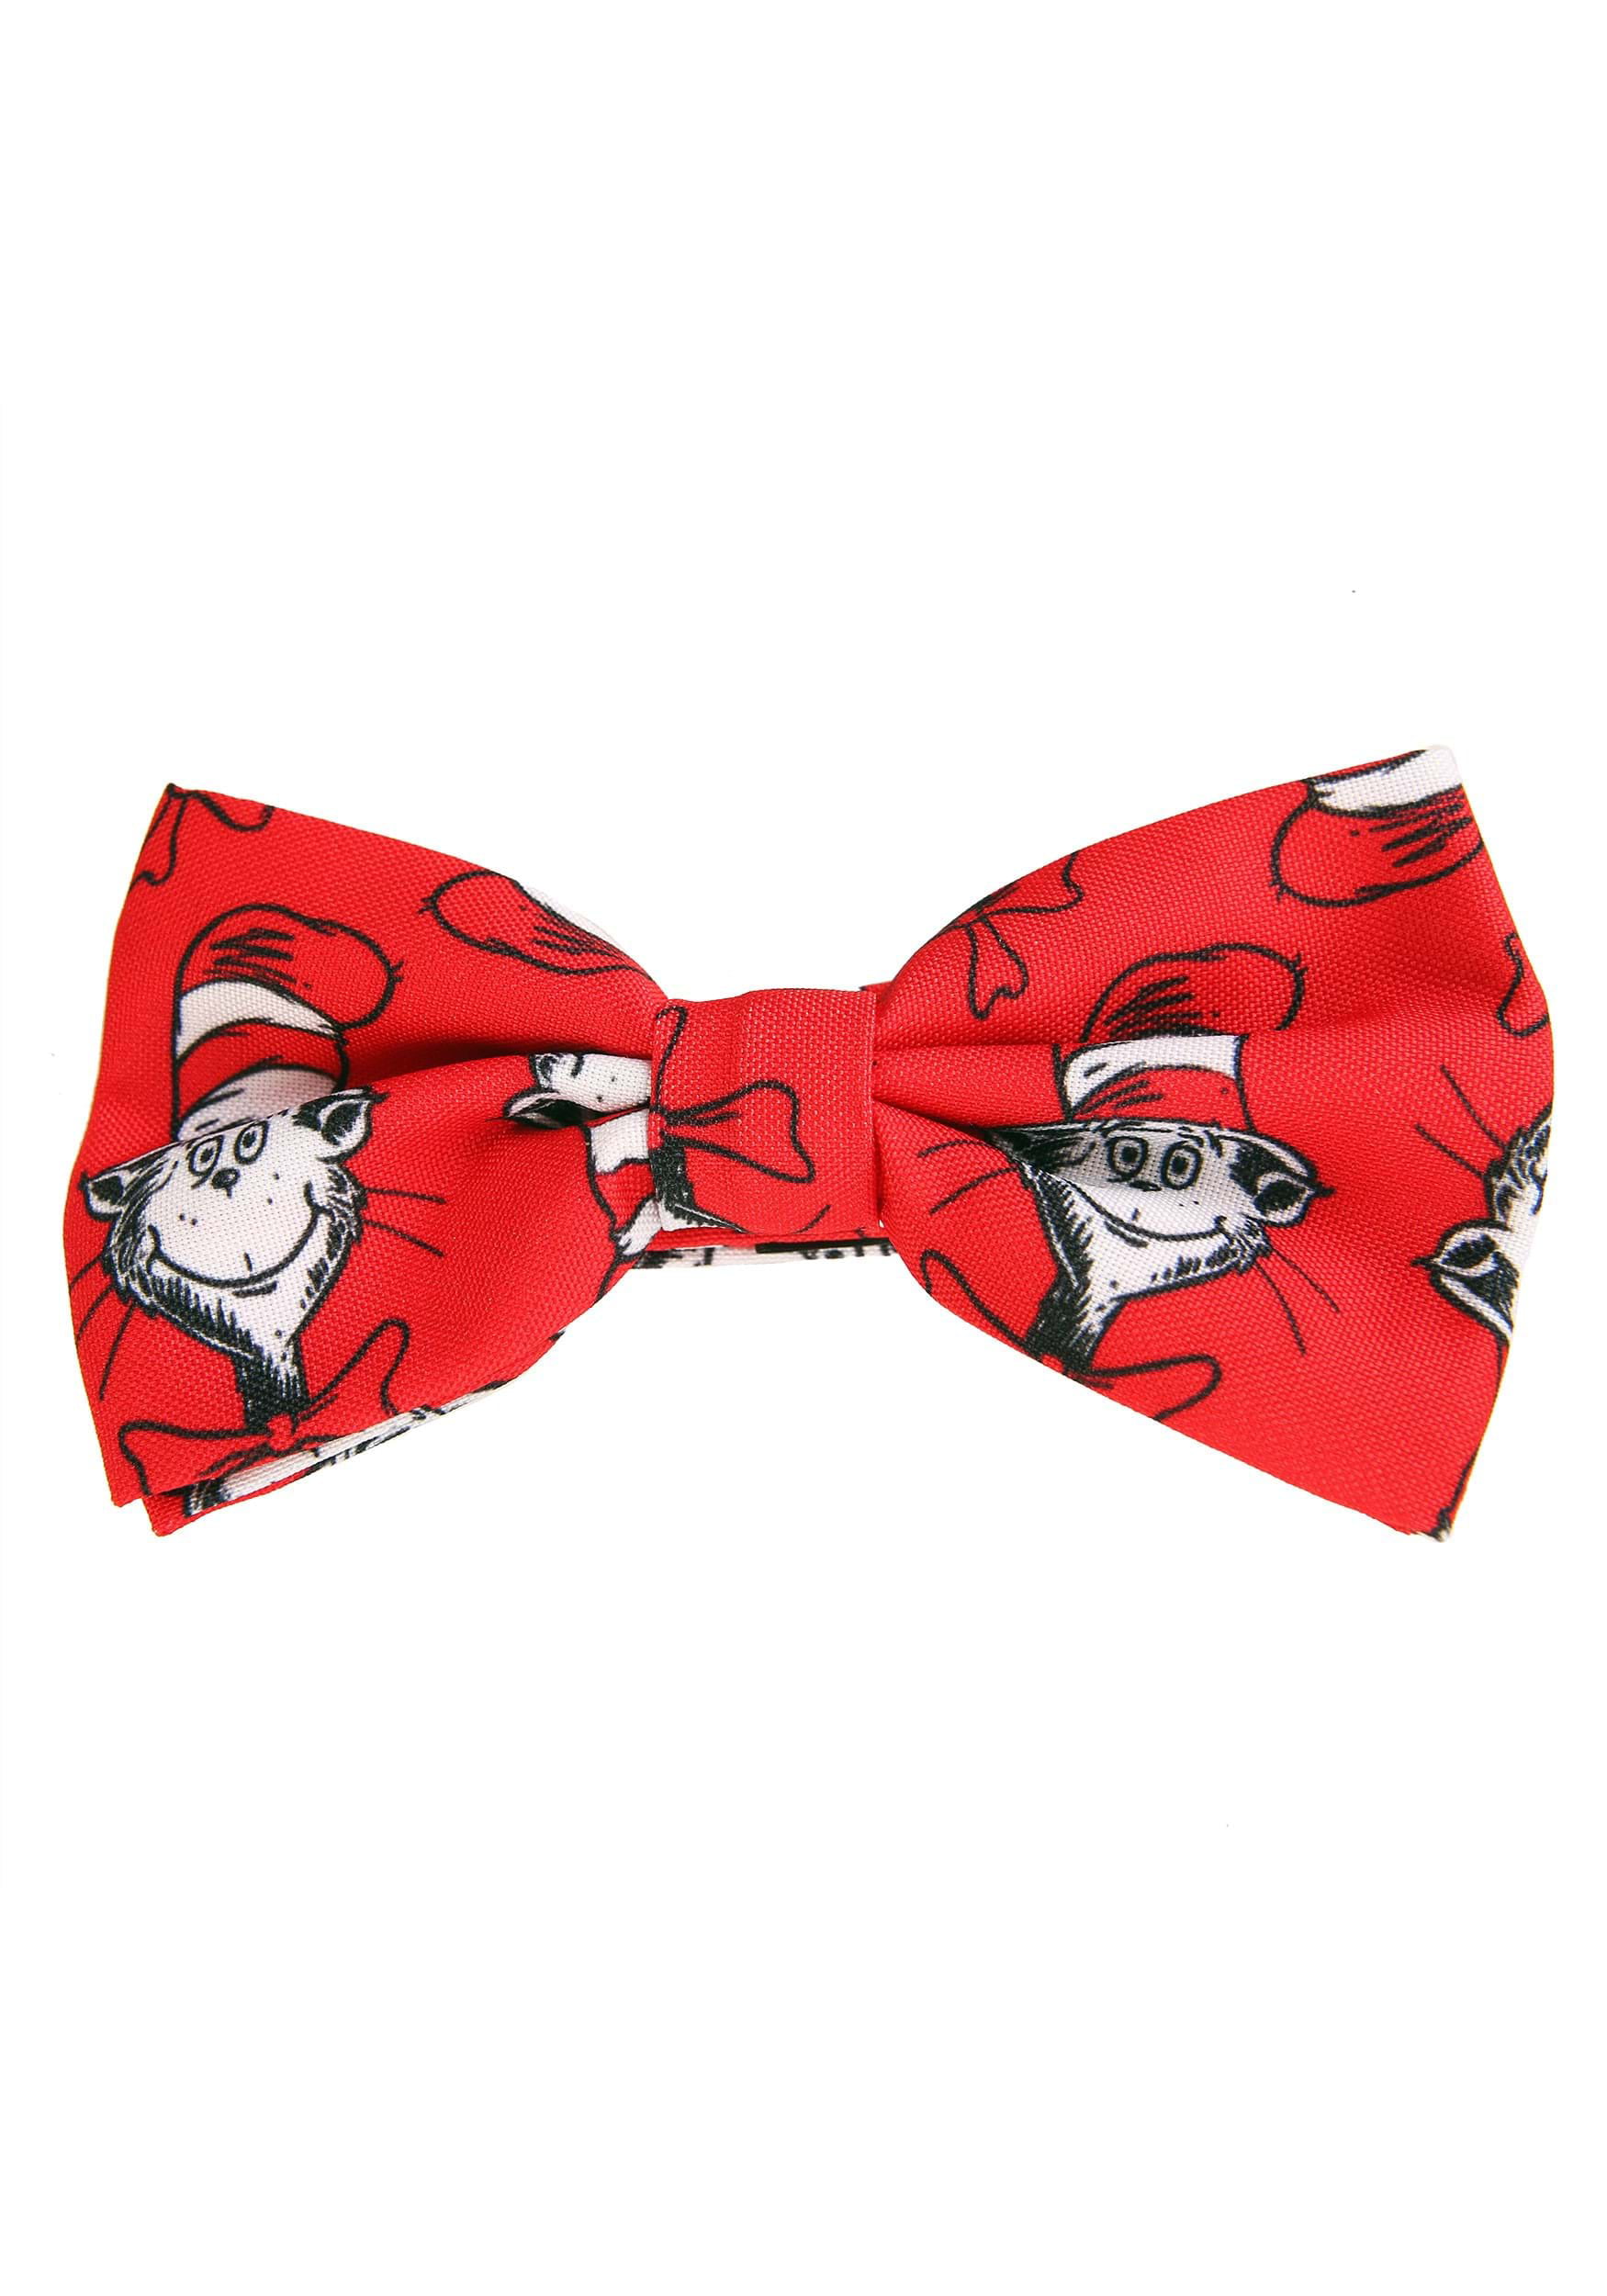 Dr Seuss Bow Tie Costume Accessory 